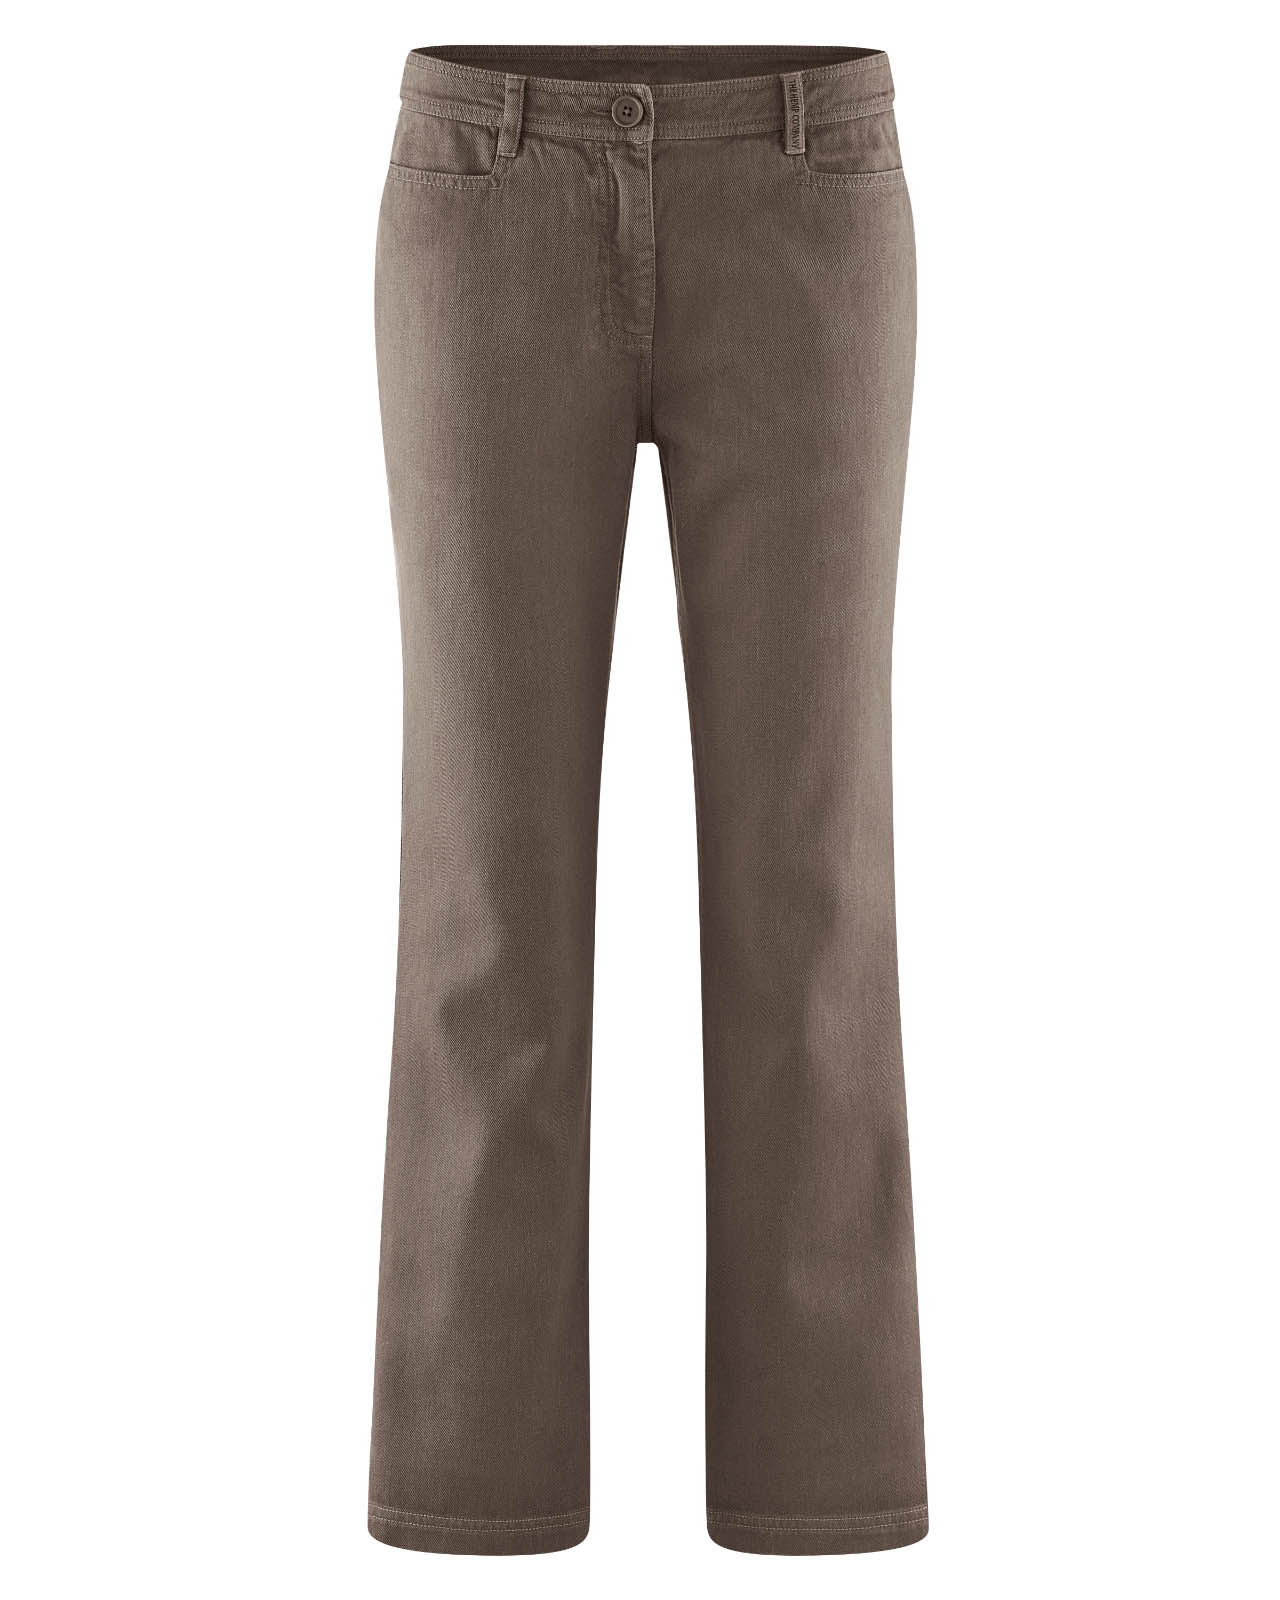 DH594 Pants, bell bottom, woven